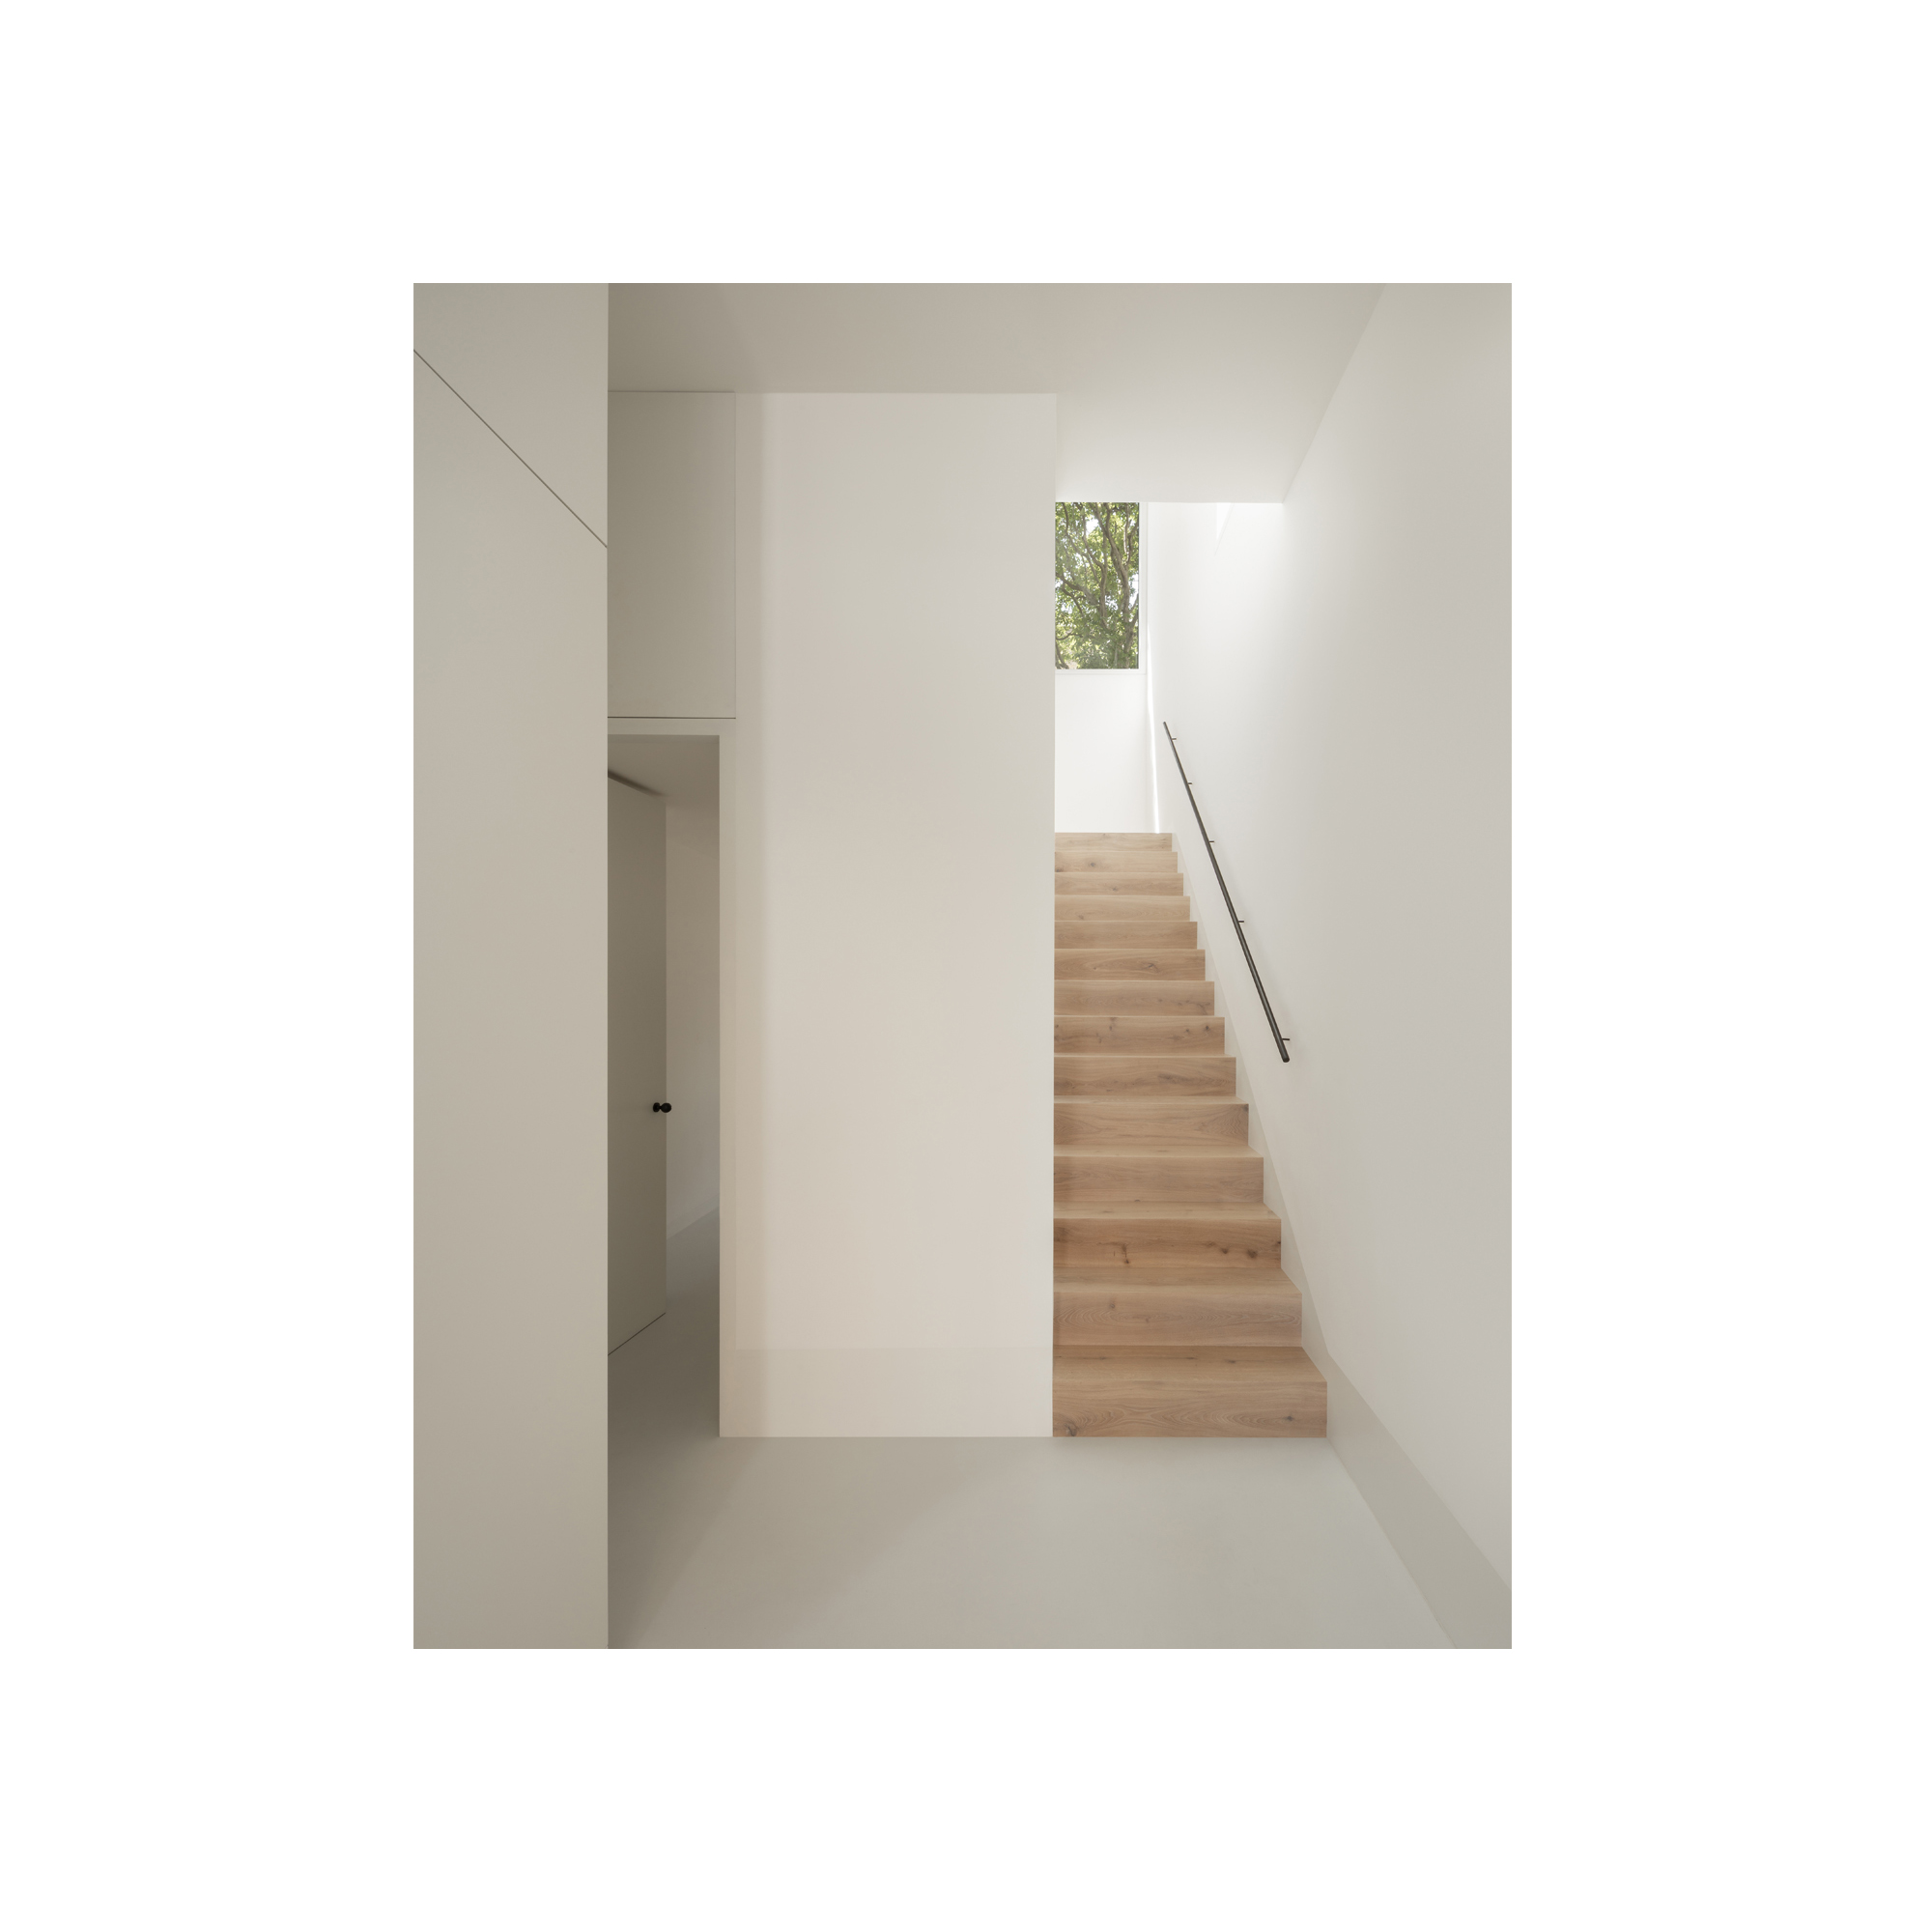 Erbar Mattes Architects Blockmakers Arms Hackney London pub conversion RIBA awards 2023 interior stair